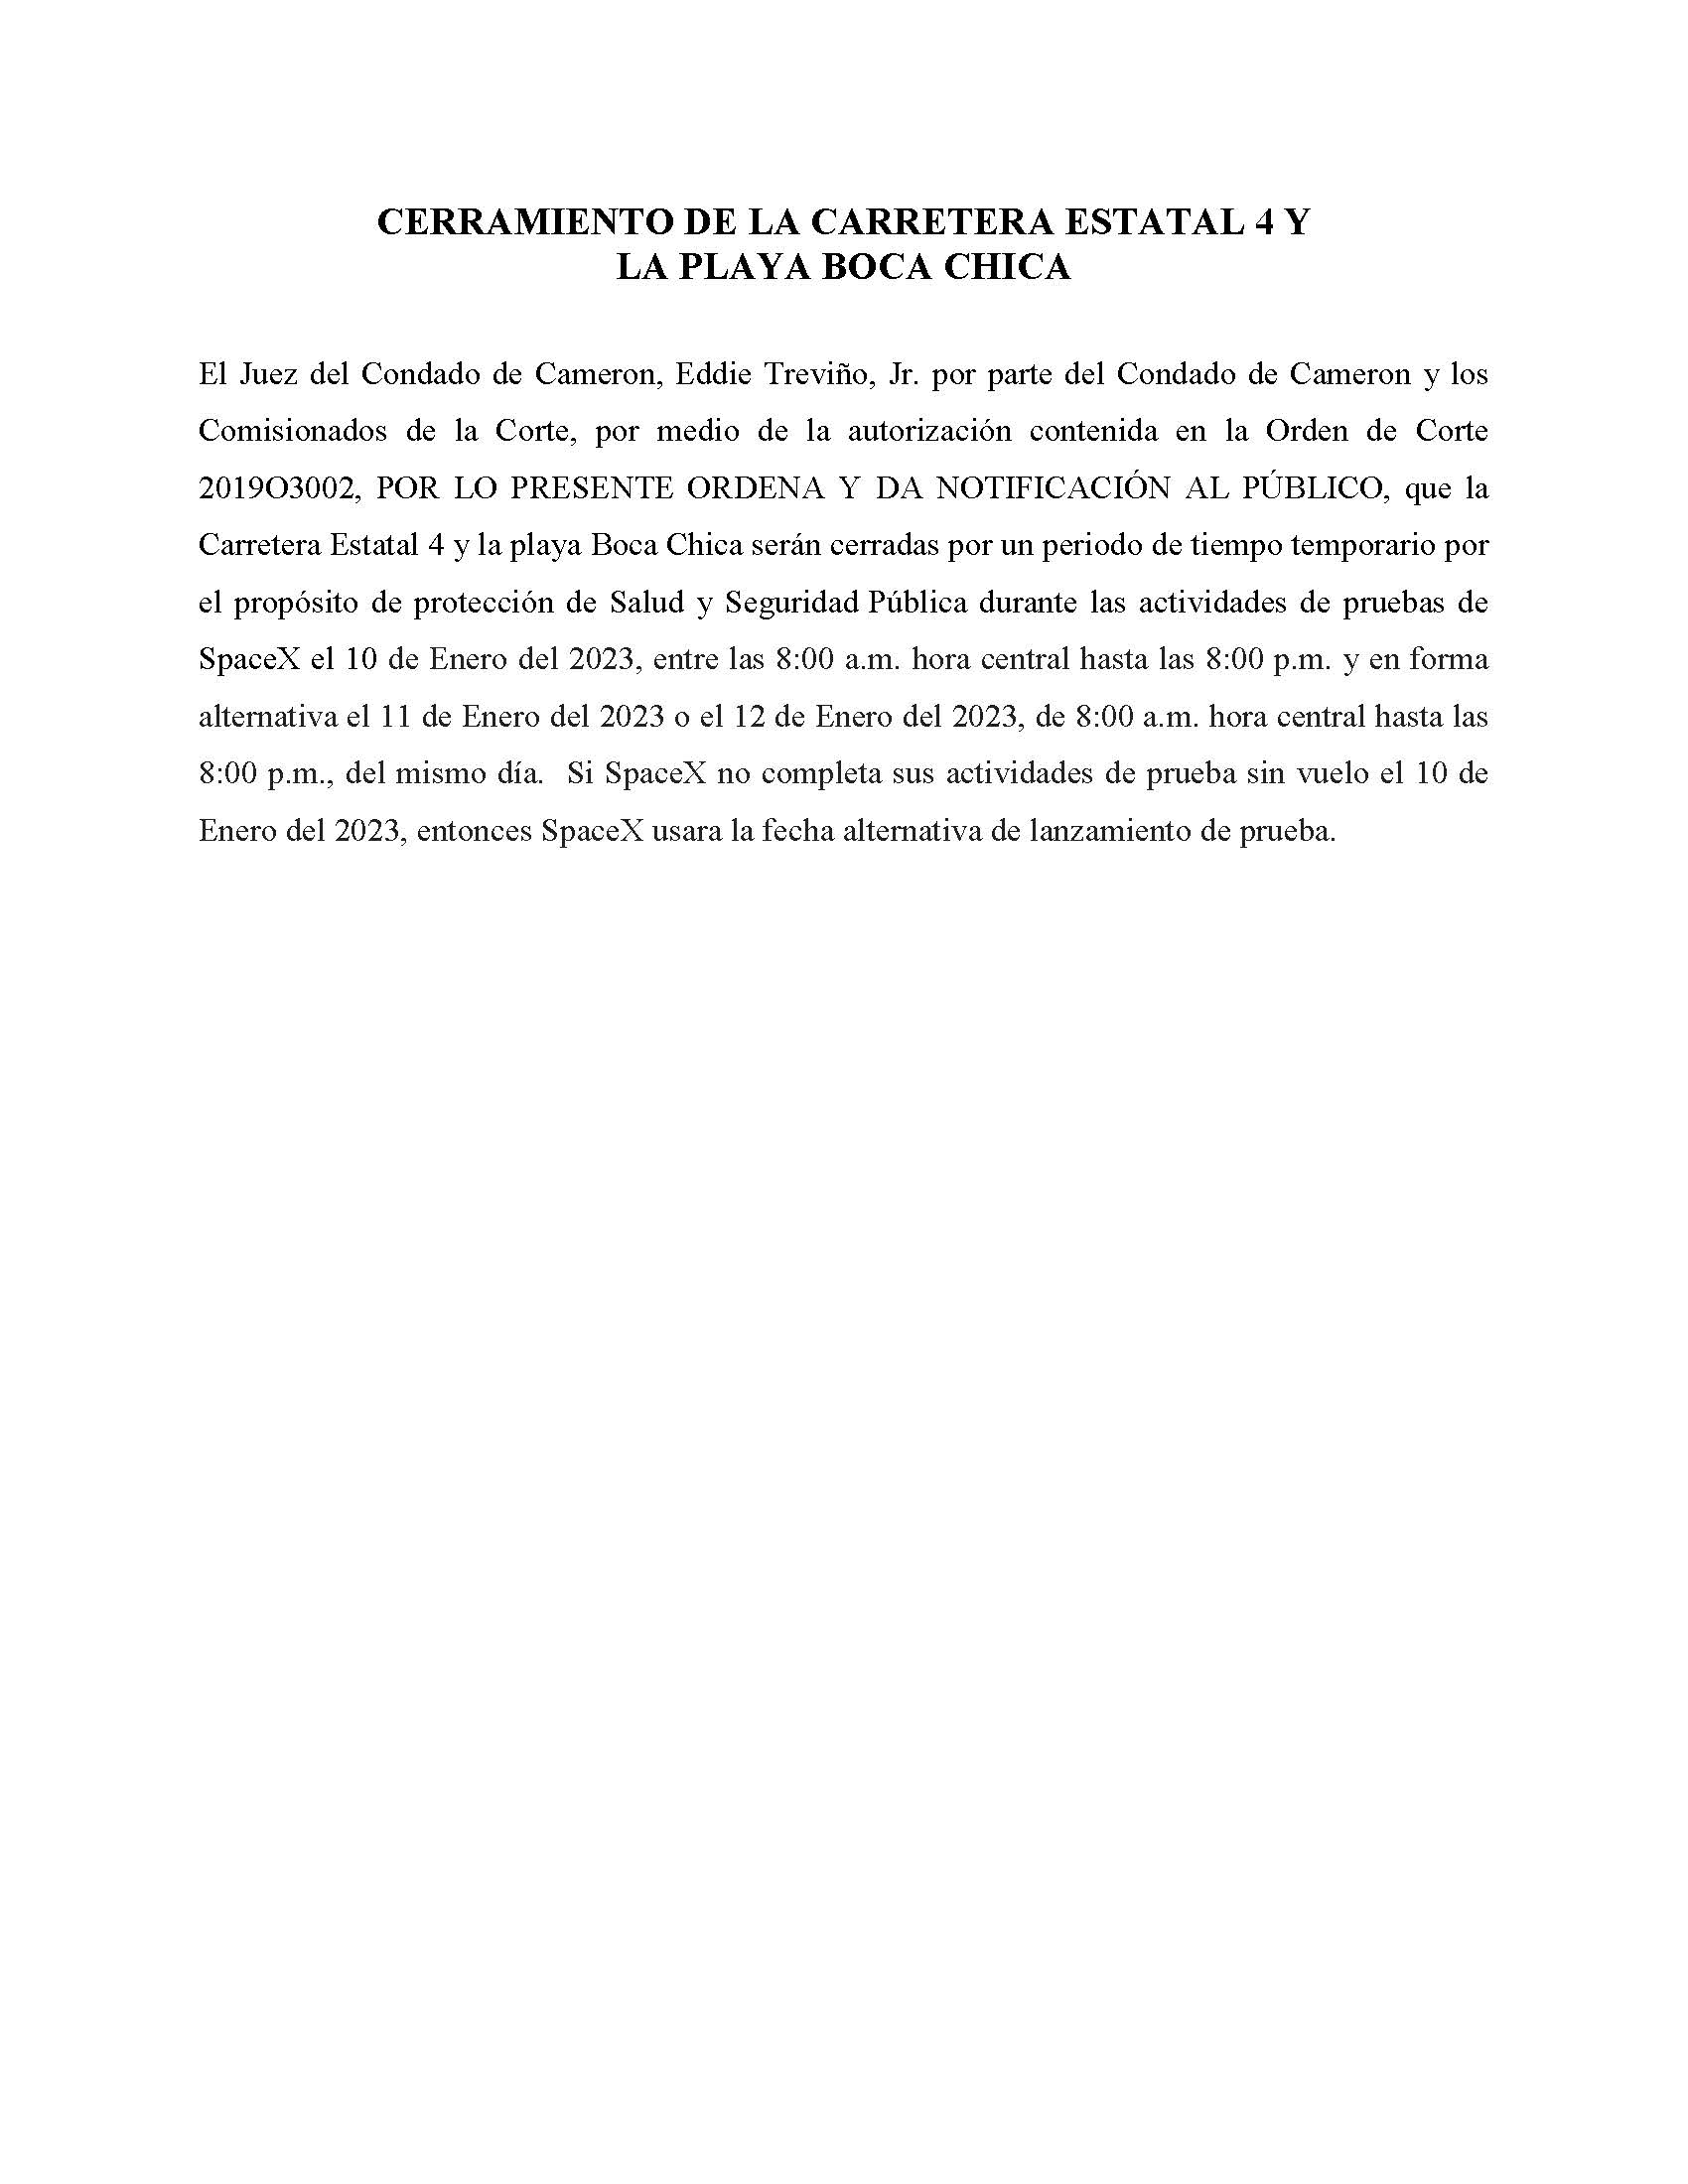 ORDER.CLOSURE OF HIGHWAY 4 Y LA PLAYA BOCA CHICA.SPANISH.01.10.23